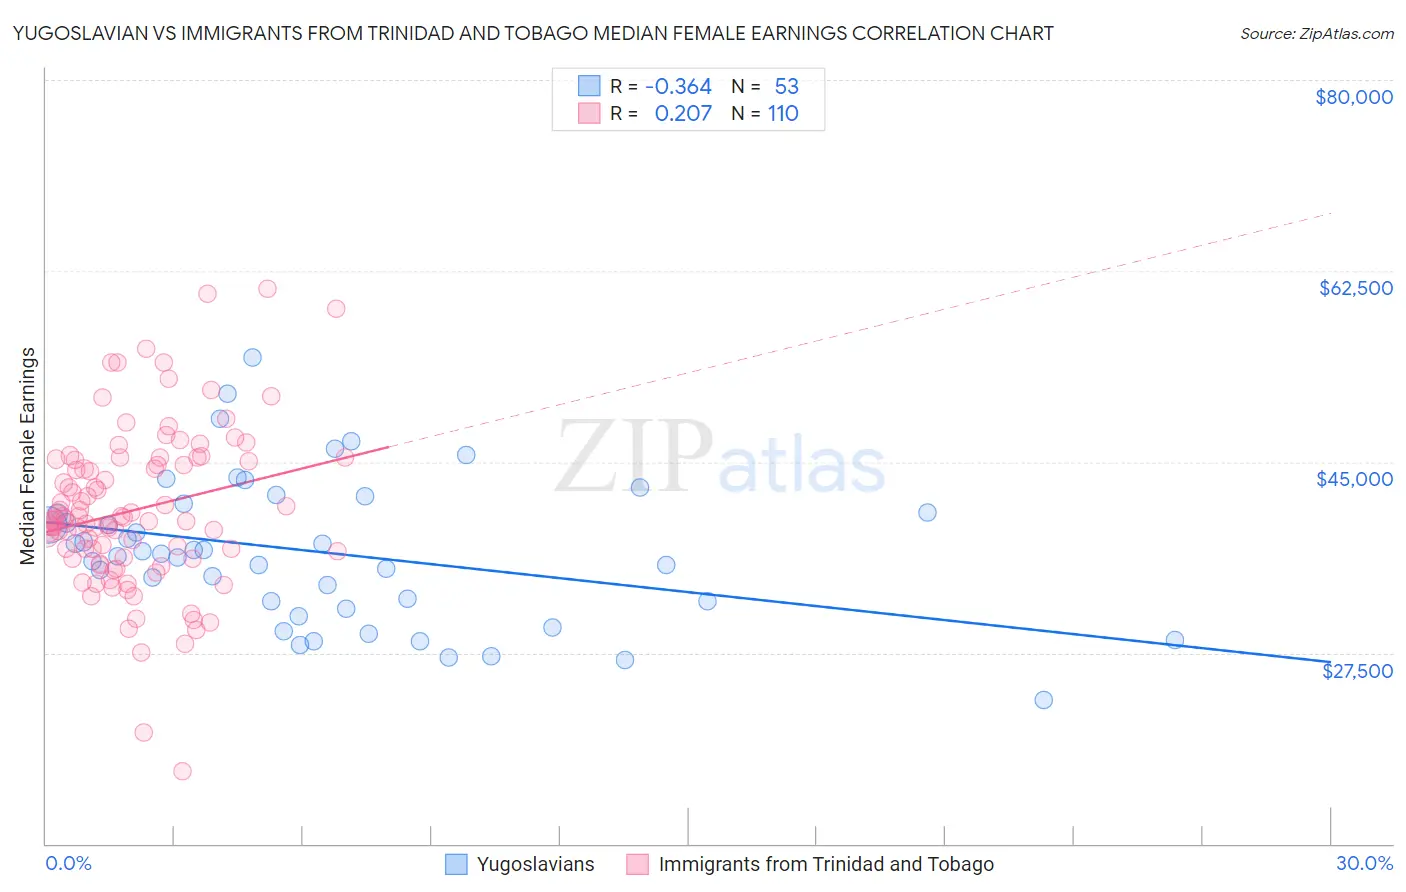 Yugoslavian vs Immigrants from Trinidad and Tobago Median Female Earnings